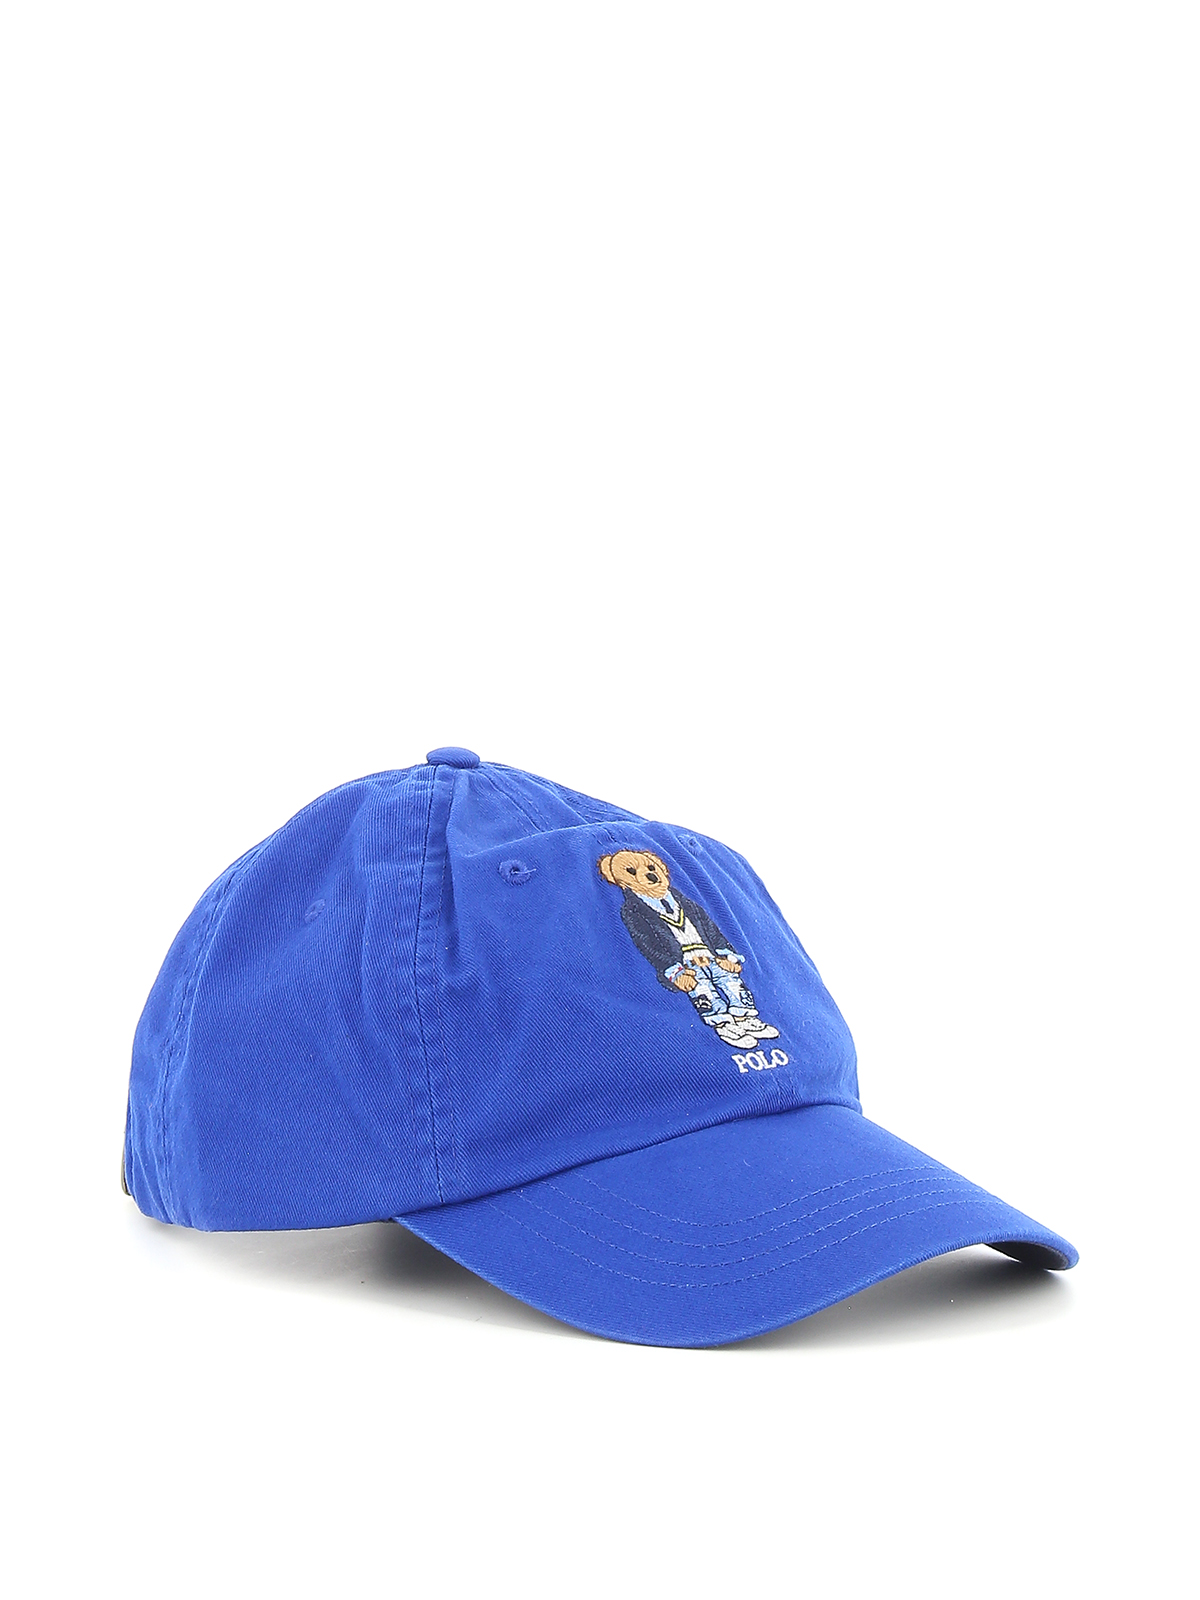 Hats and caps Polo Ralph Lauren - Polo Bear baseball cap